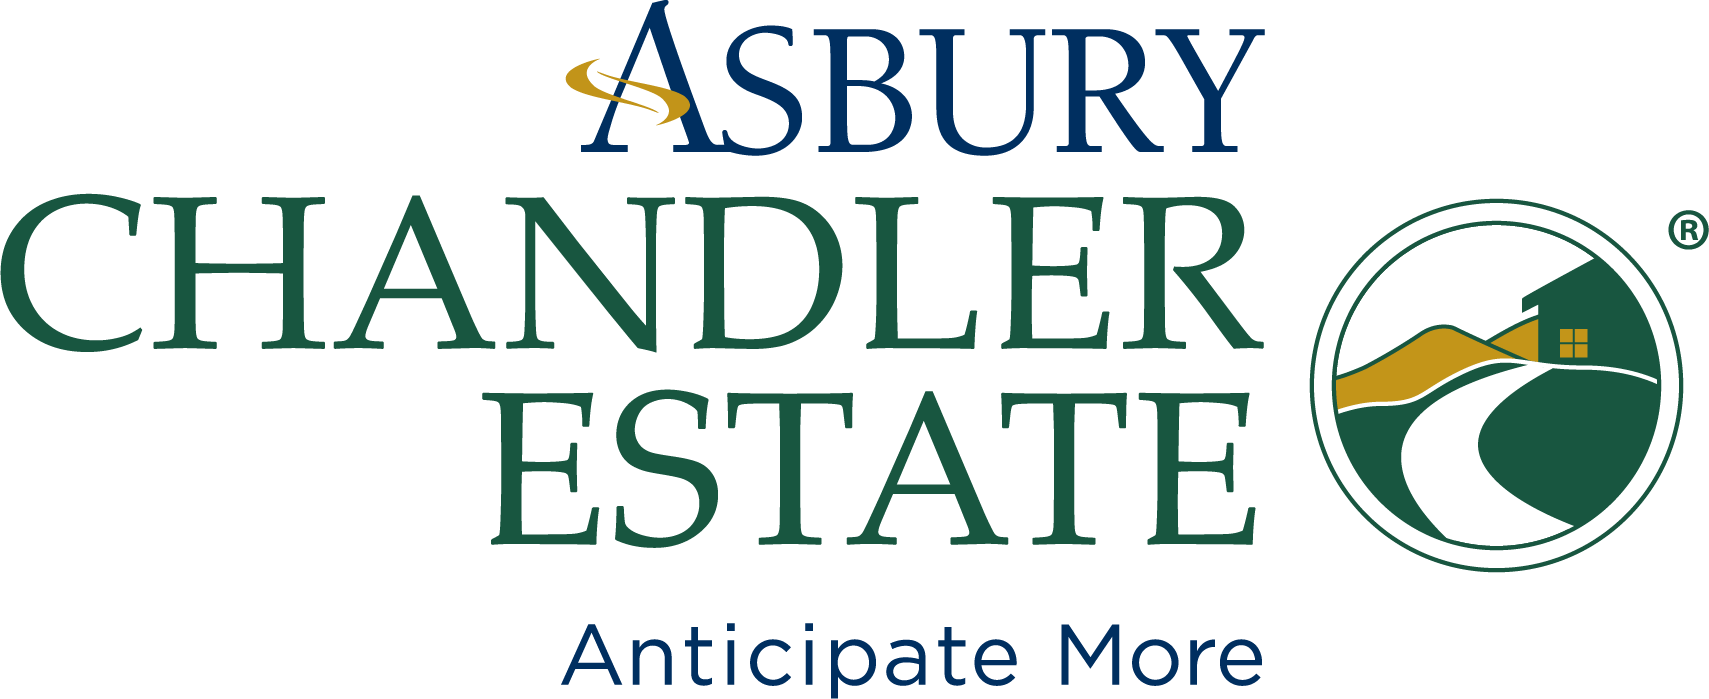 asbury chandler estate anticipate more